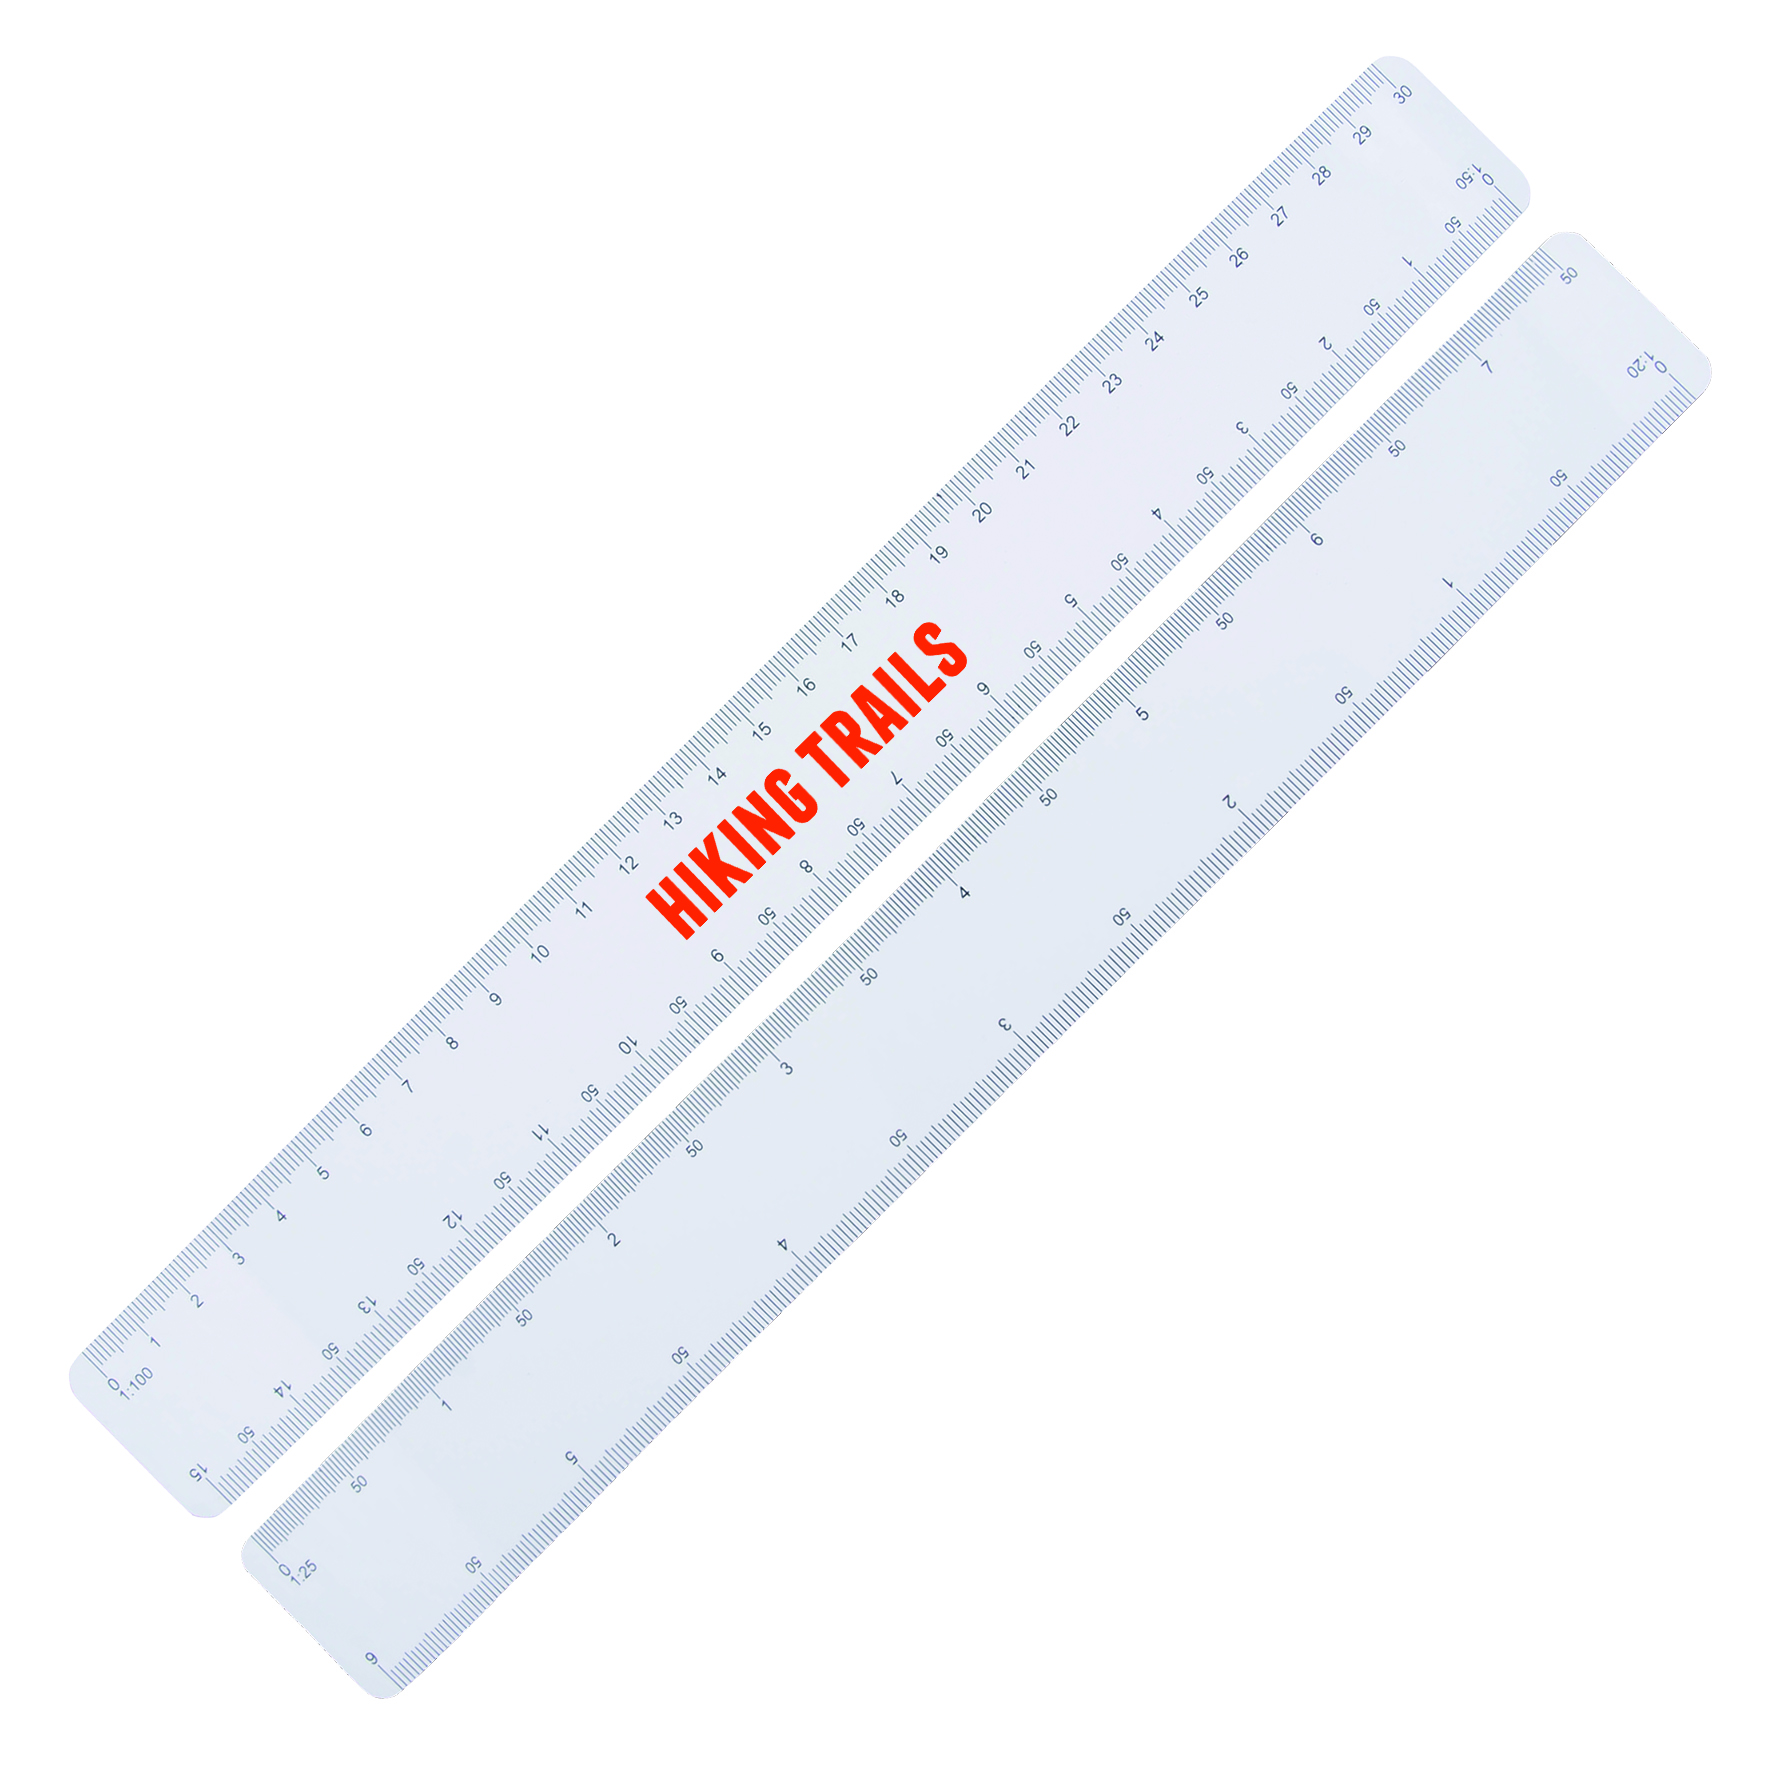 x817523 02 - Ultra thin scale ruler (30cm)